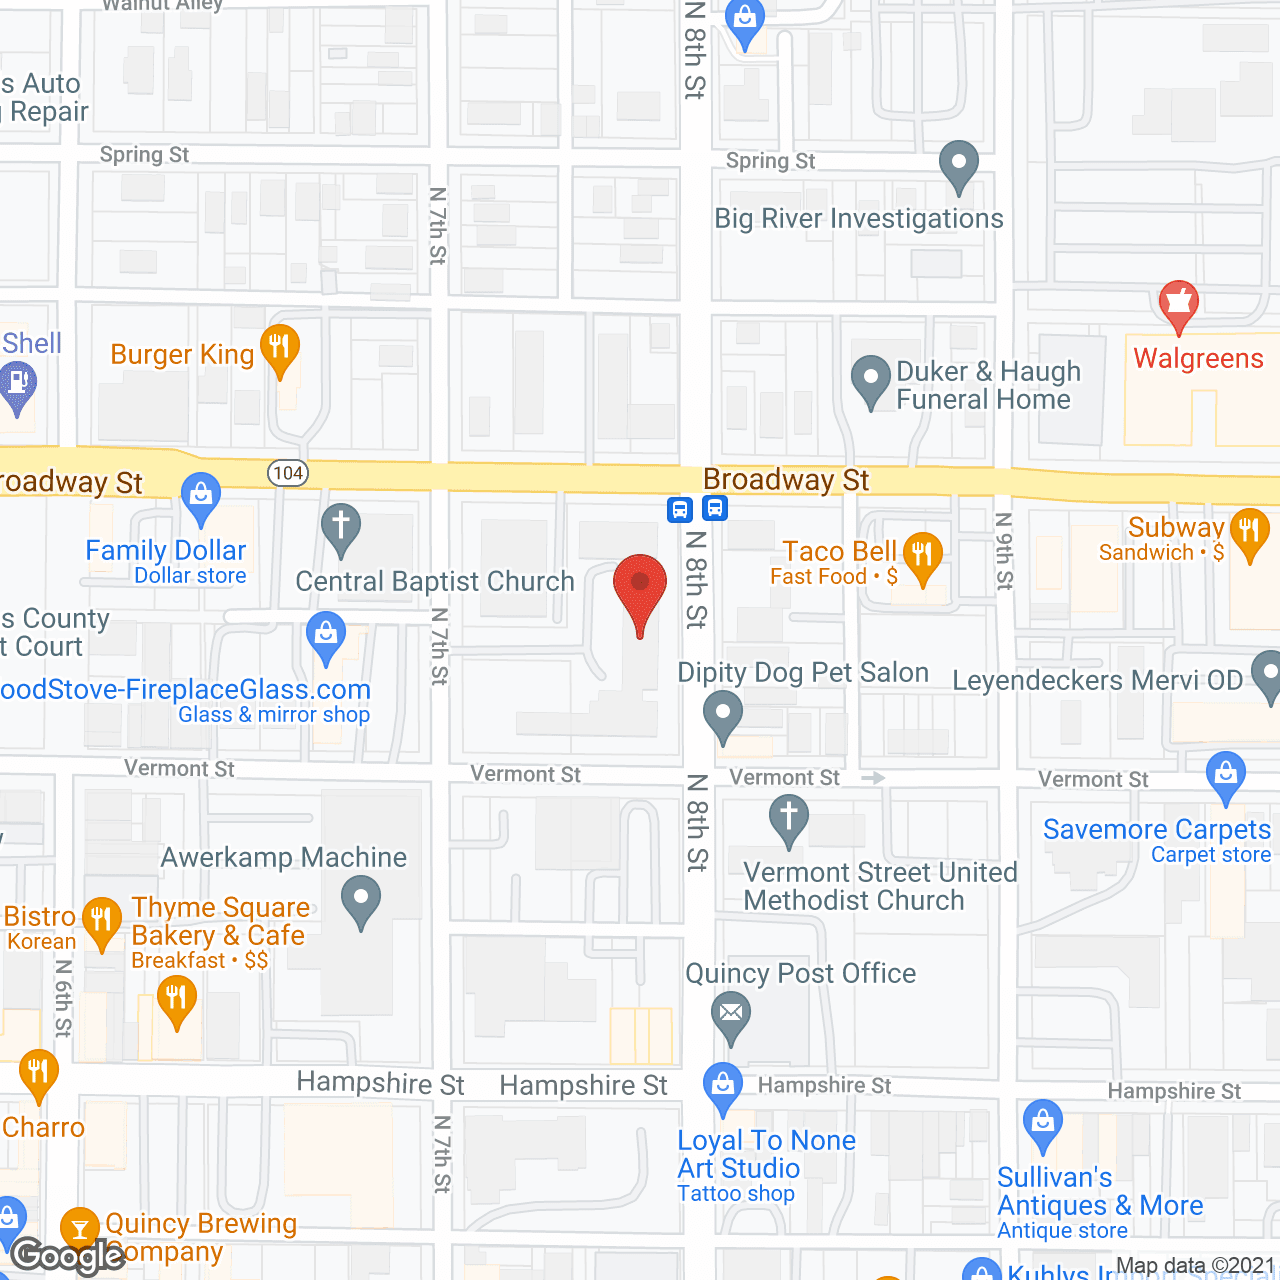 Good Shepherd Apartments in google map